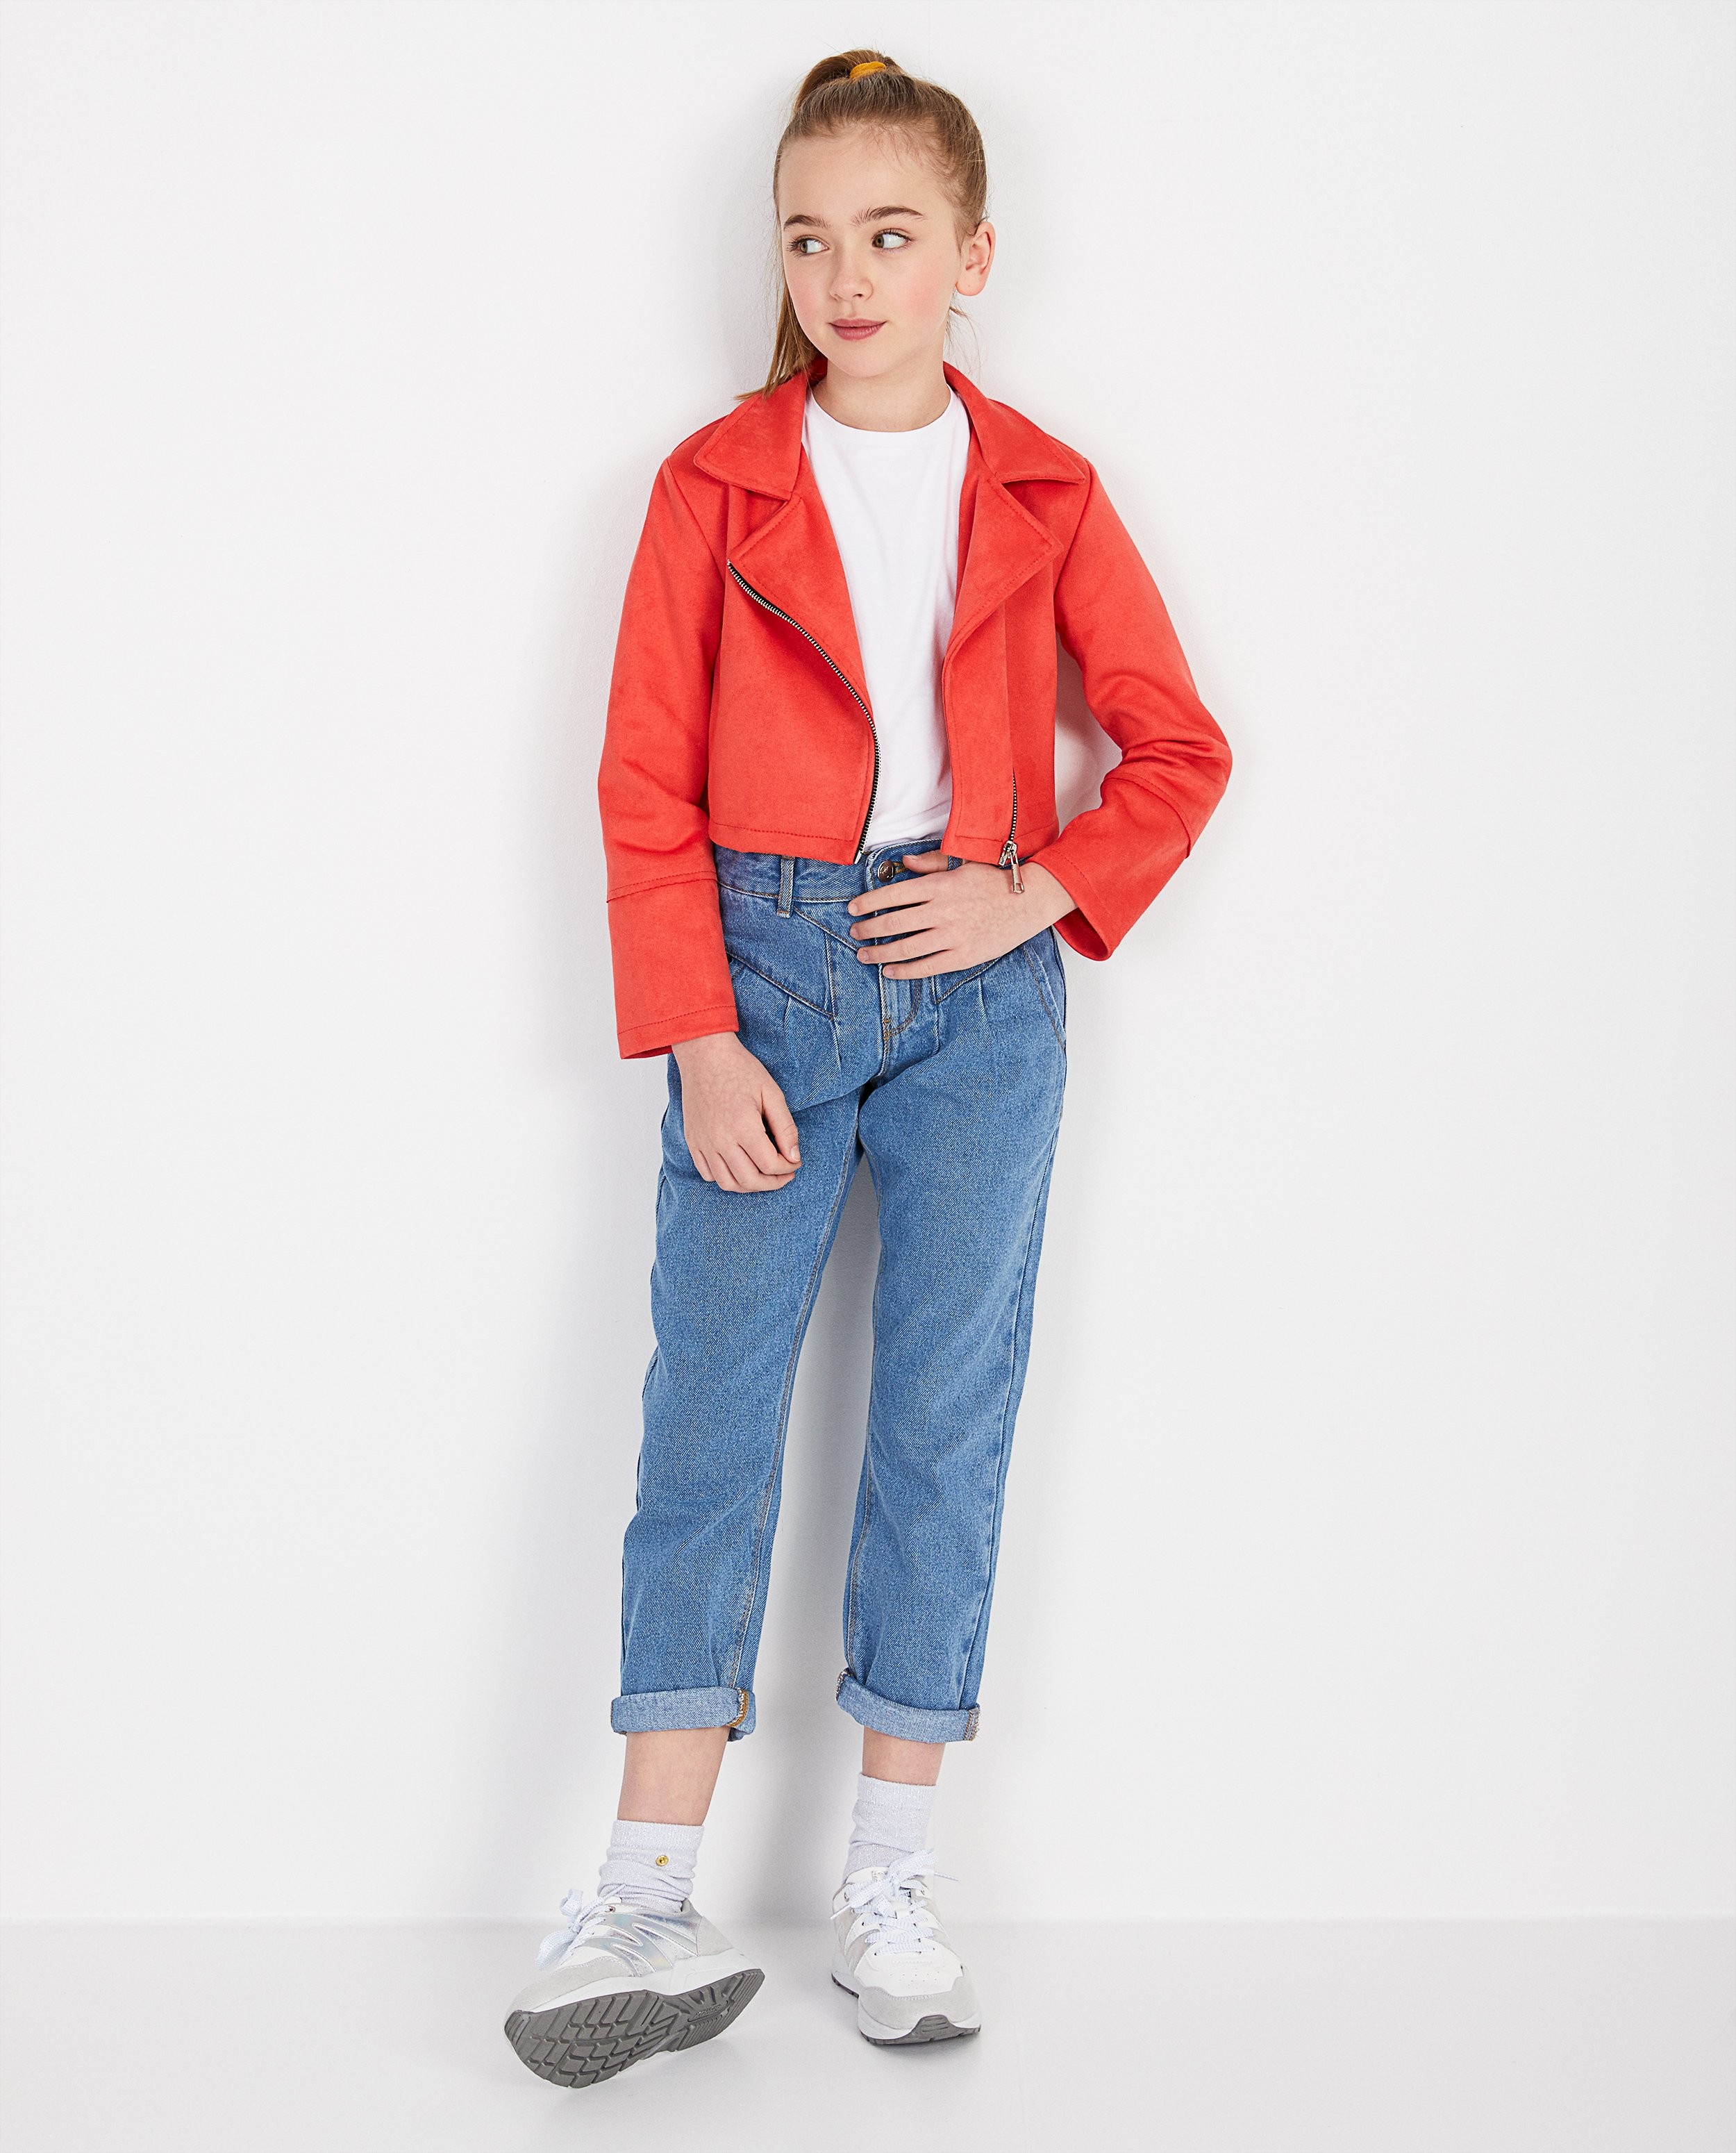 Rode jasje van suède Ella Italia - cropped model - Ella Italia